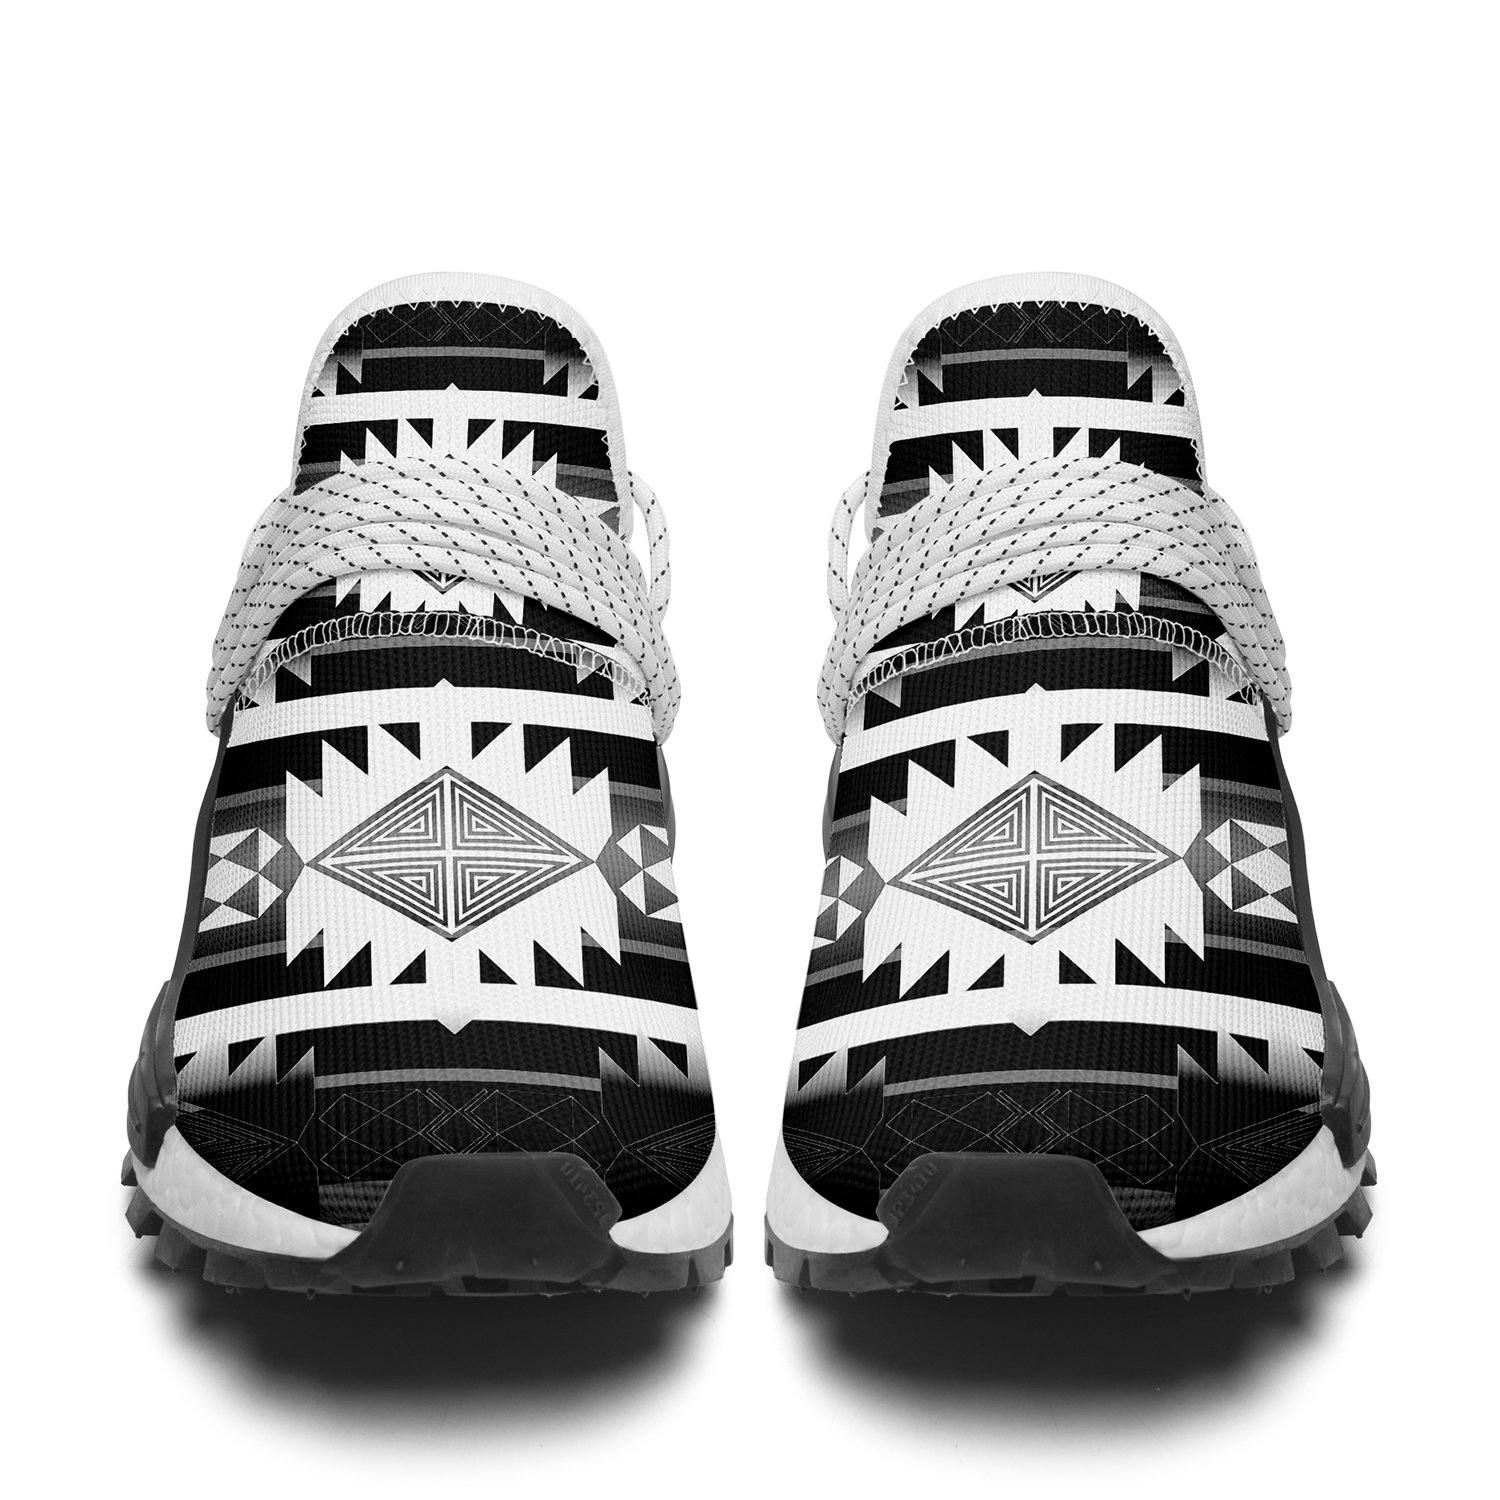 Okotoks Black and White Okaki Sneakers Shoes 49 Dzine 